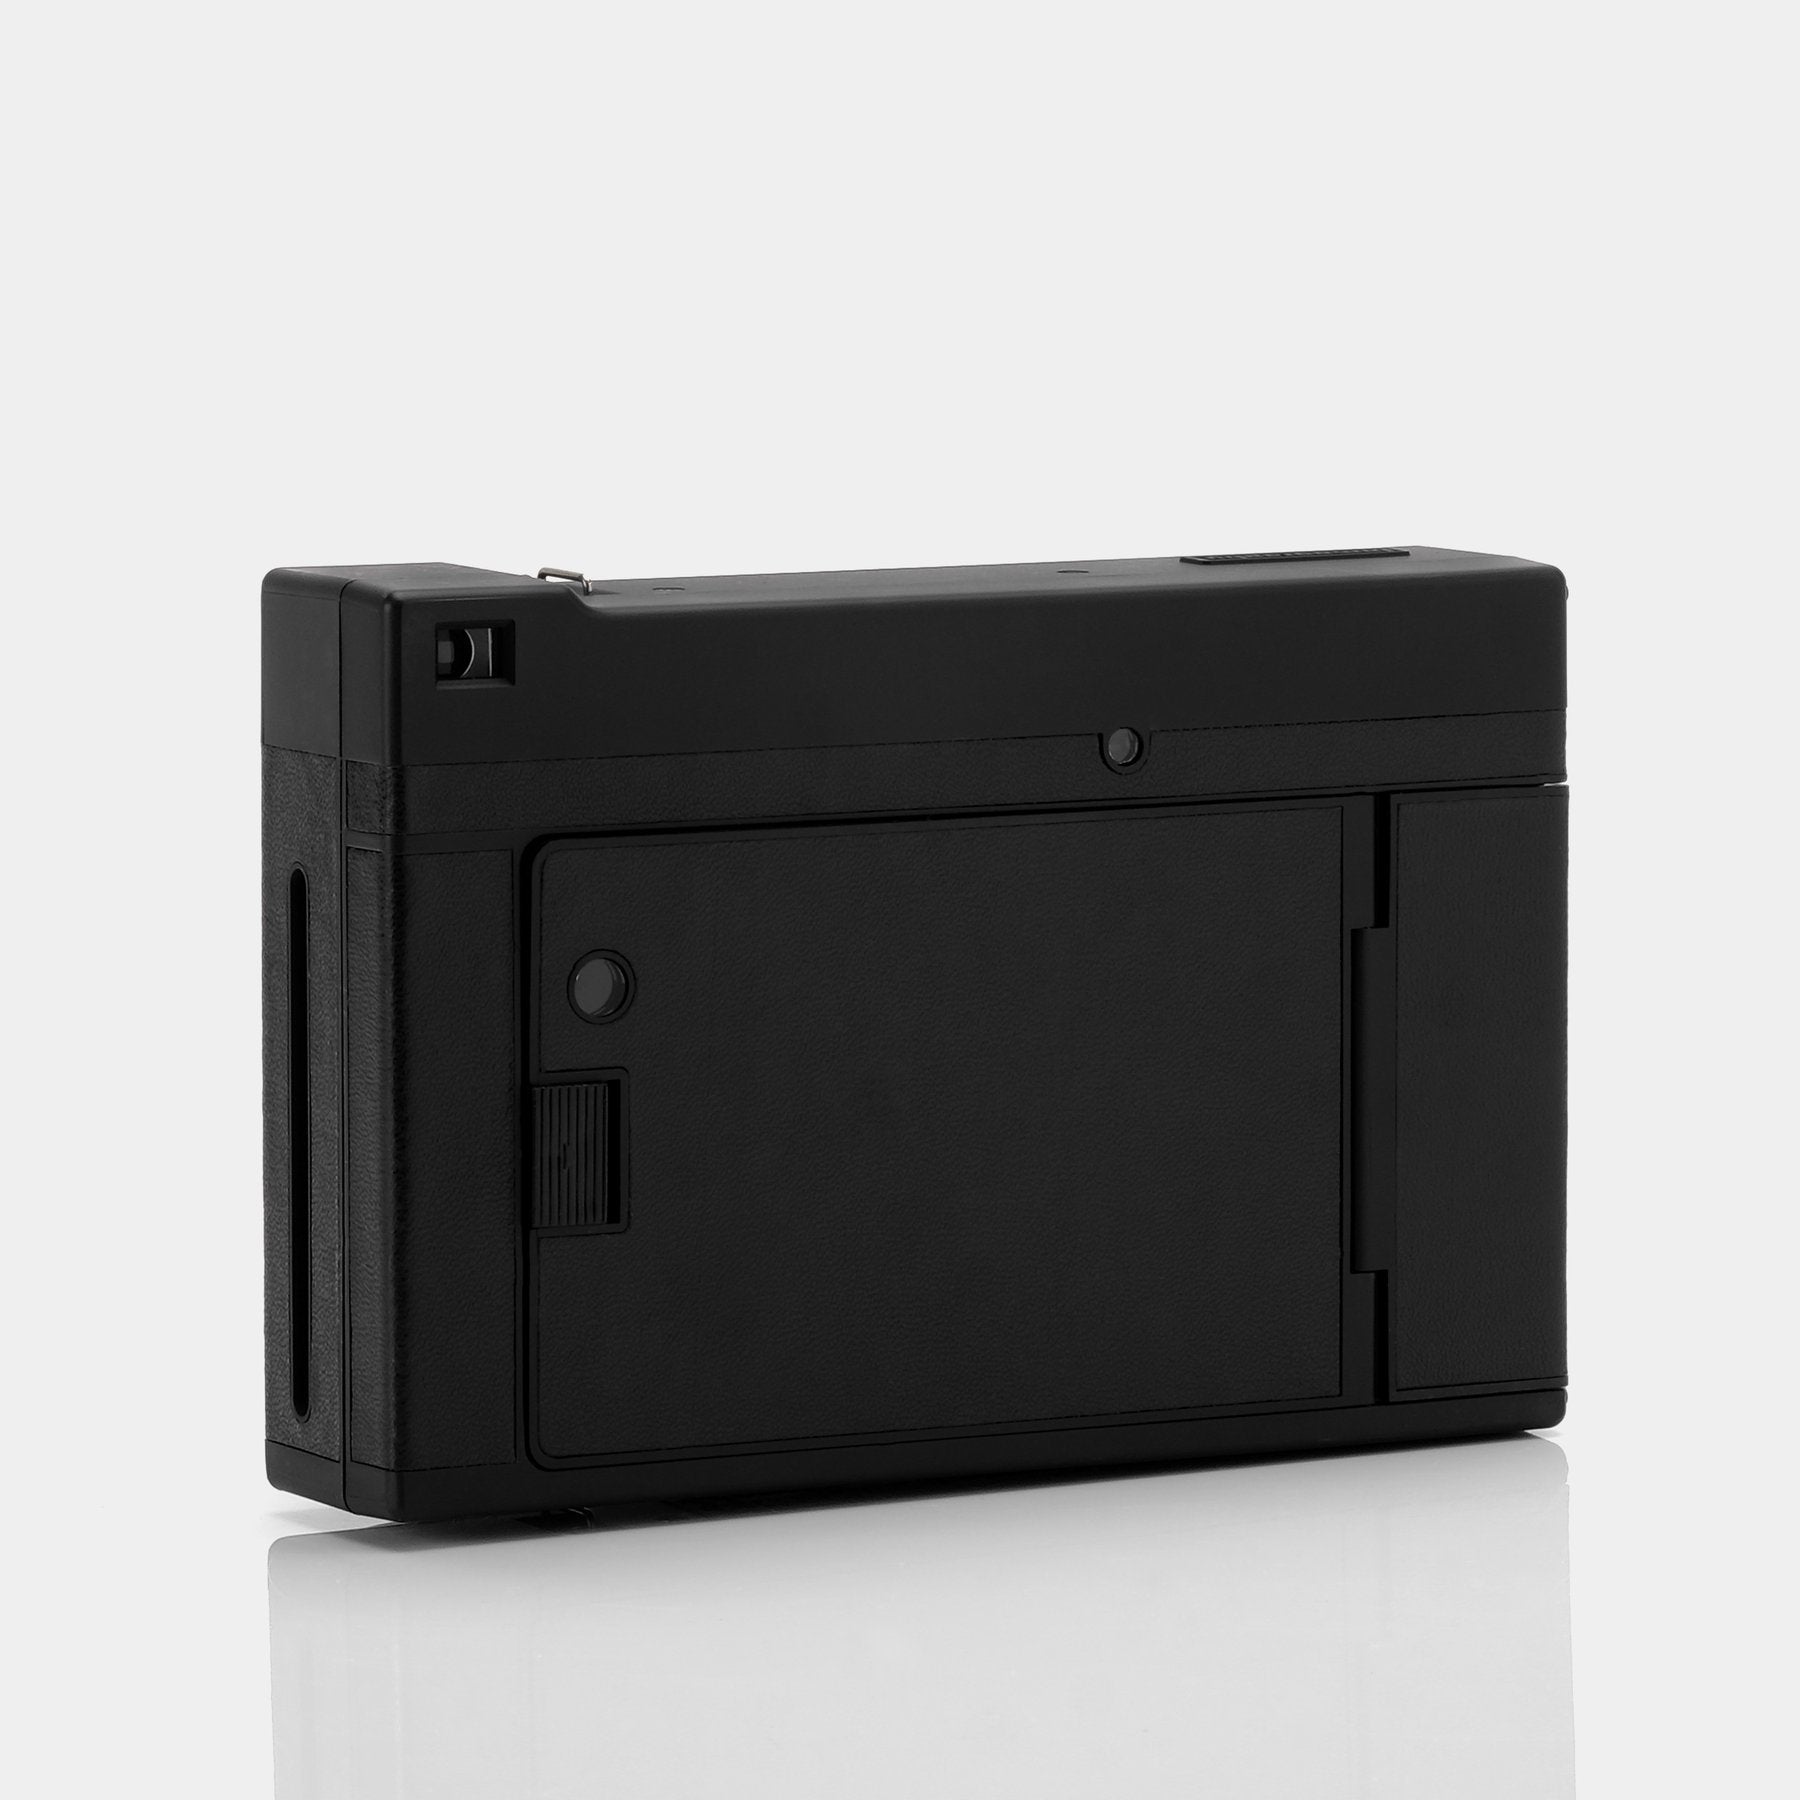 Lomography Lomo'Instant Instax Mini Black Instant Film Camera and Lenses